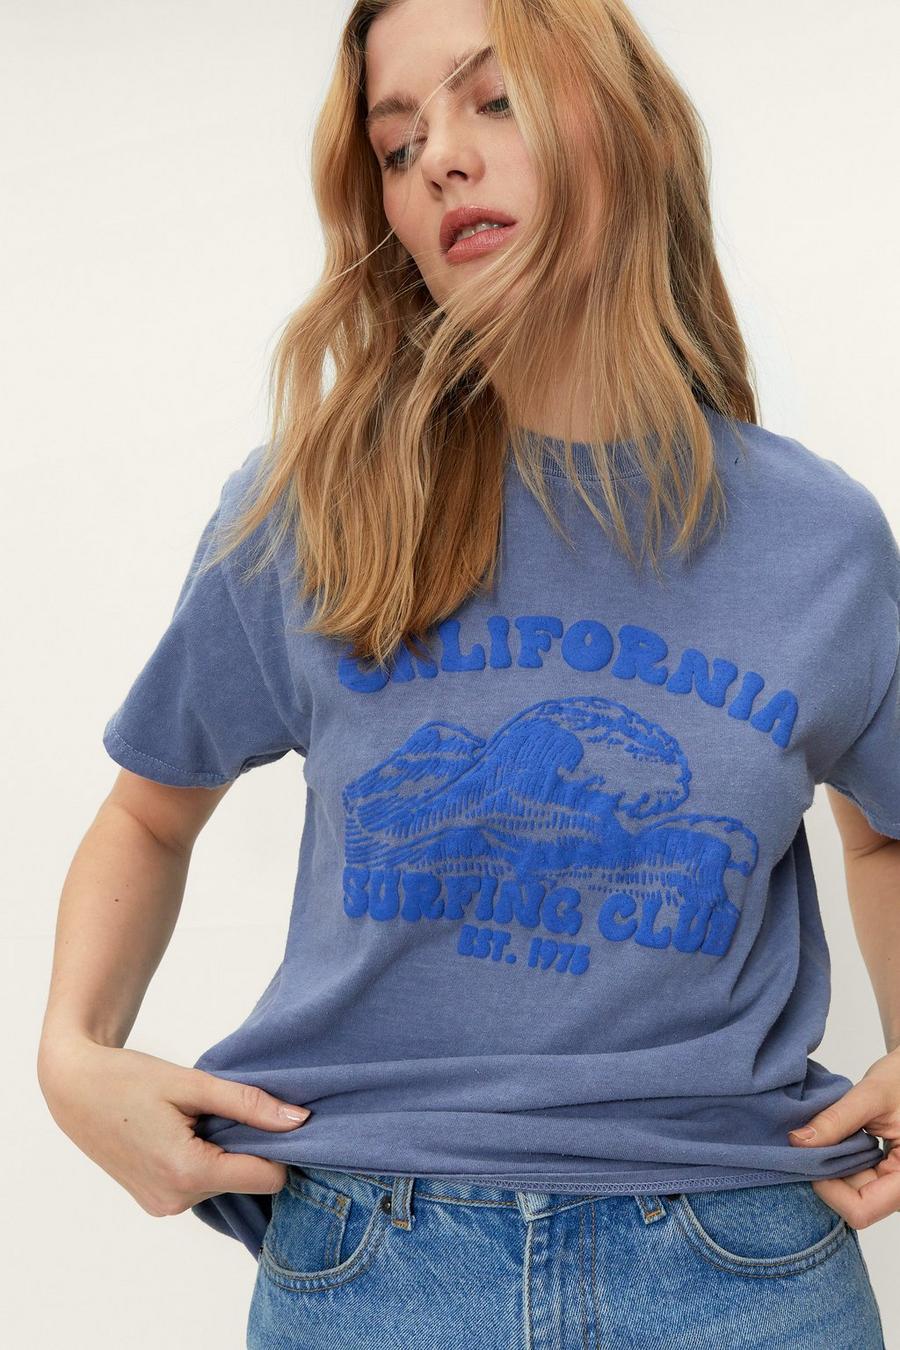 California Surfing Club T-shirt